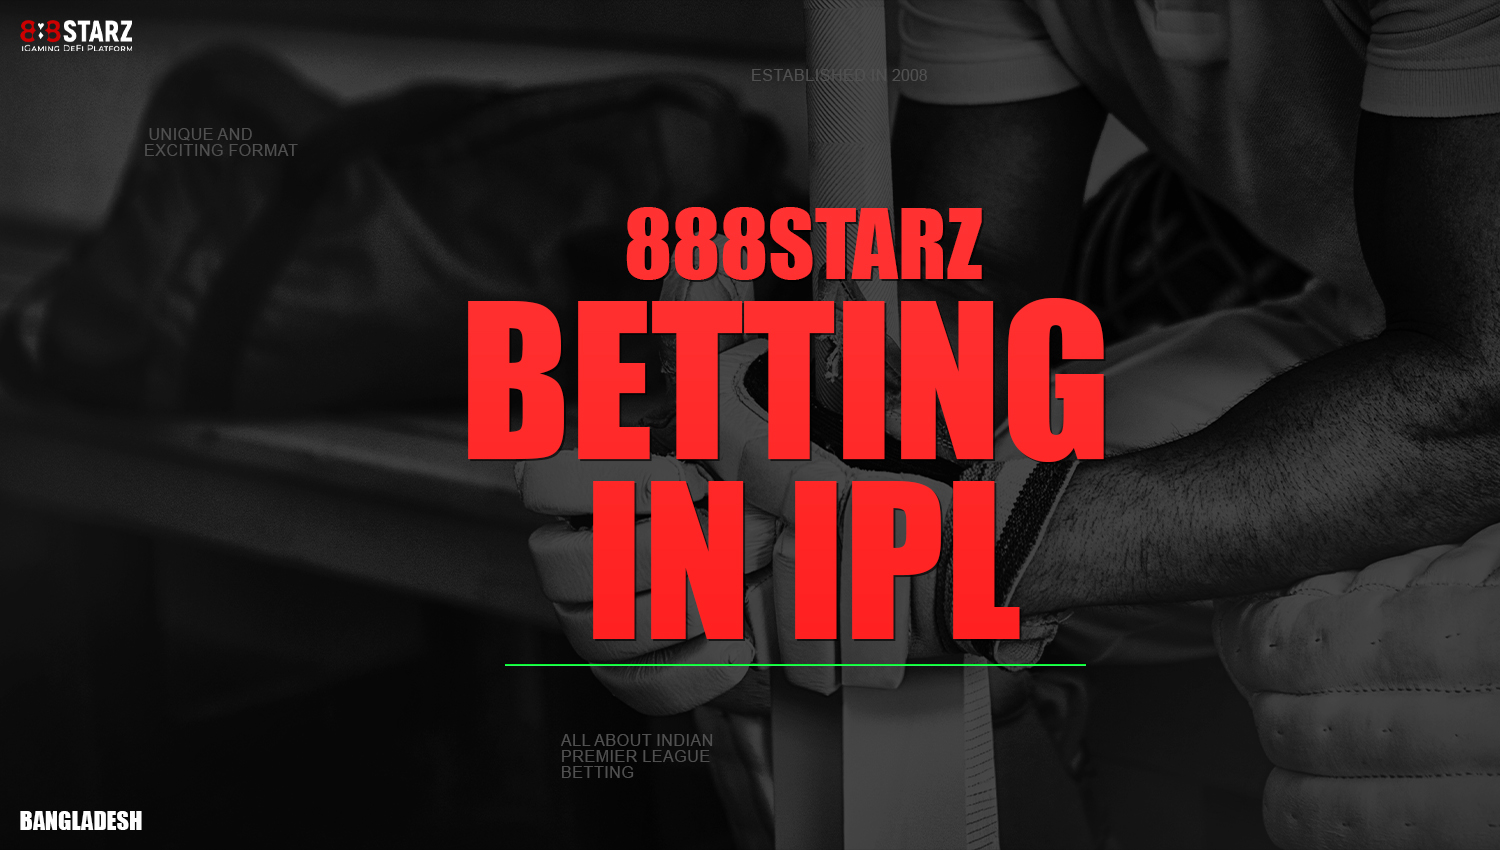 IPL betting at online bookmaker 888starz bangladesh